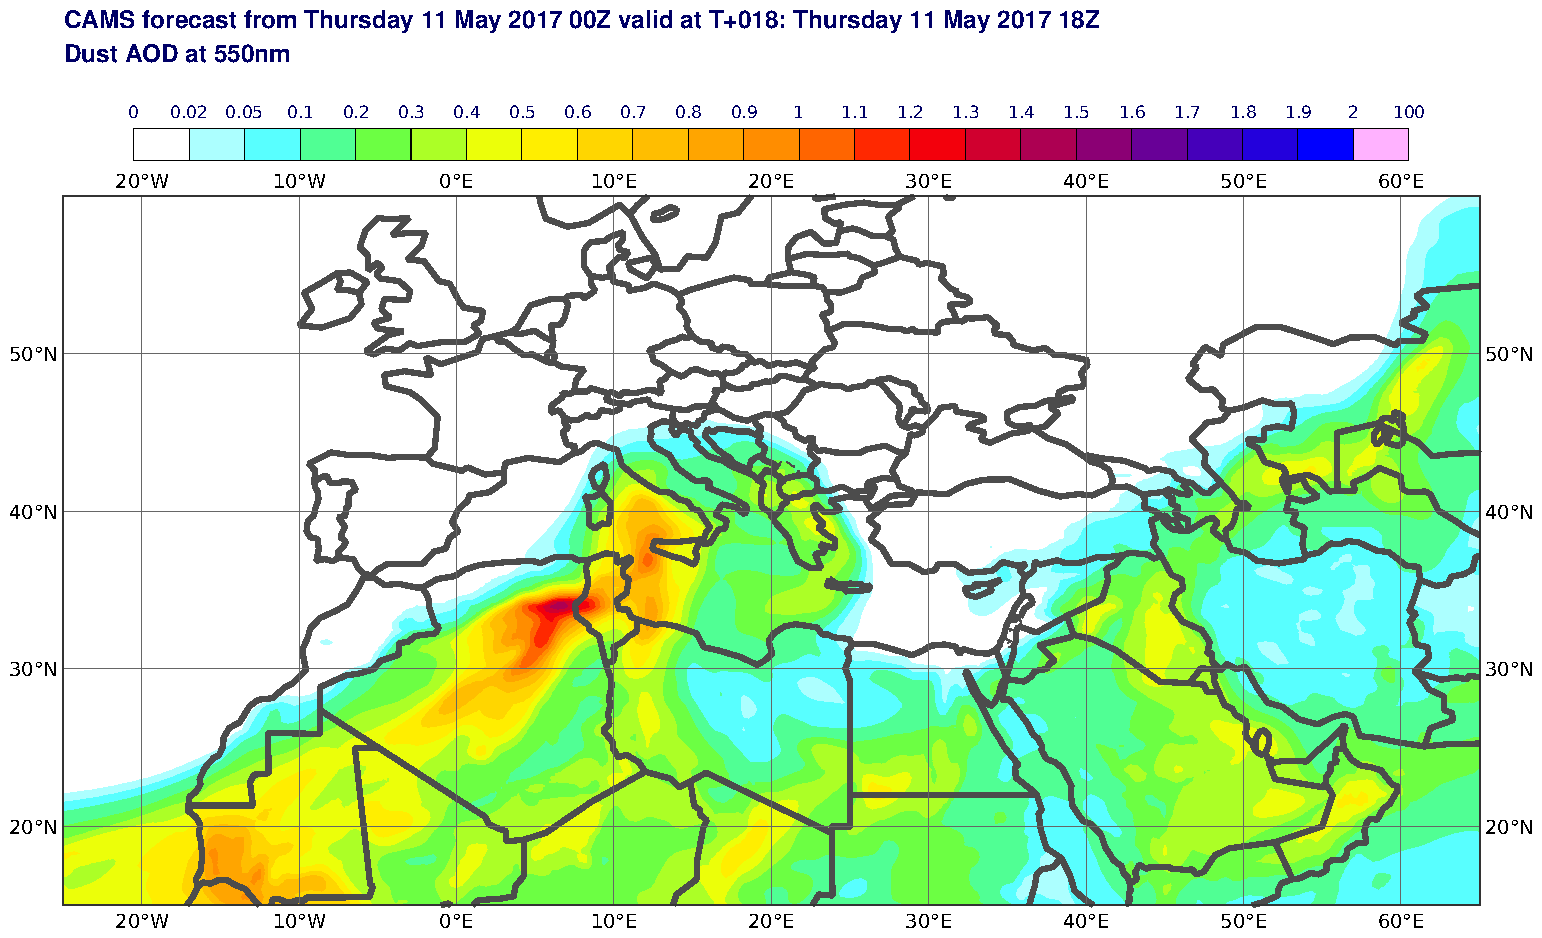 Dust AOD at 550nm valid at T18 - 2017-05-11 18:00